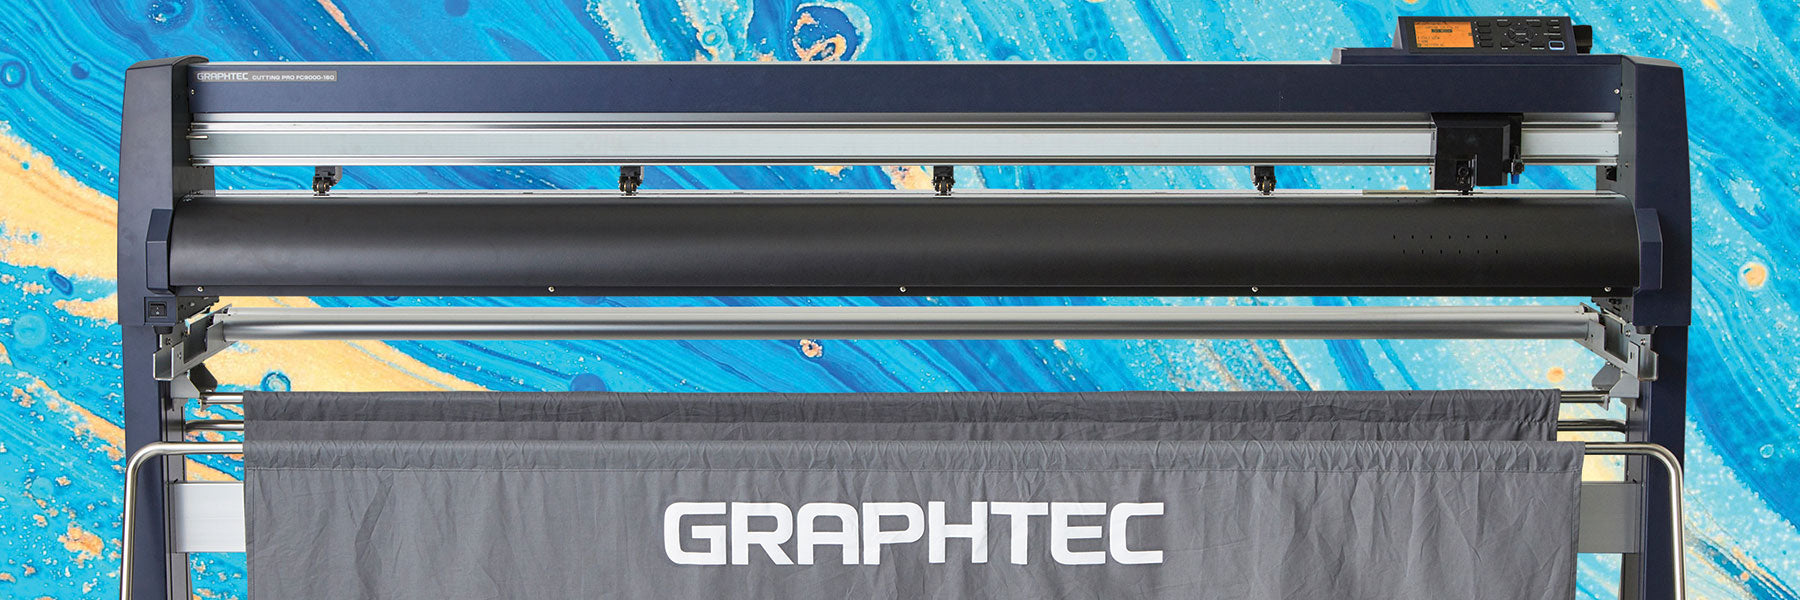 graphtec-fc9000-showcase-img